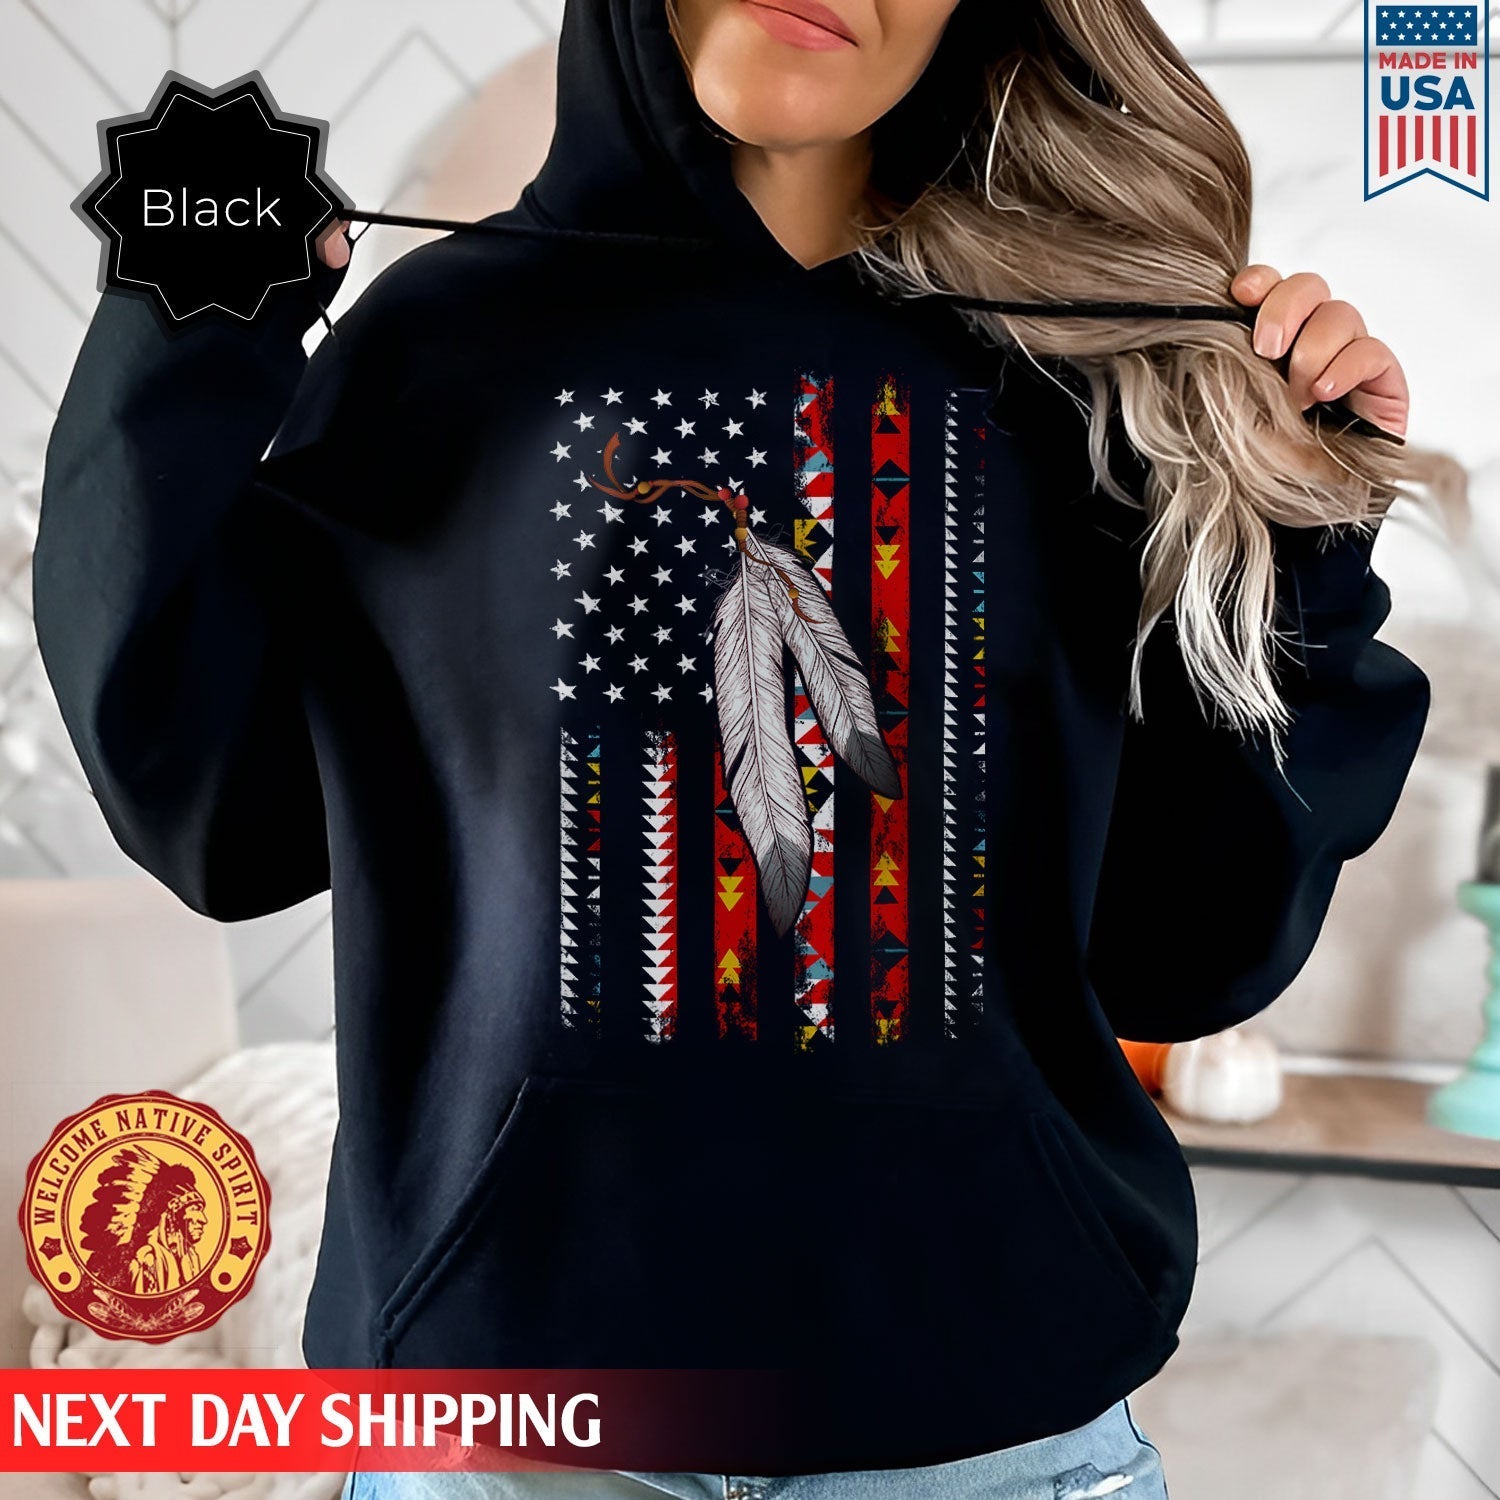 Native American Flag Unisex T-Shirt/Hoodie/Sweatshirt